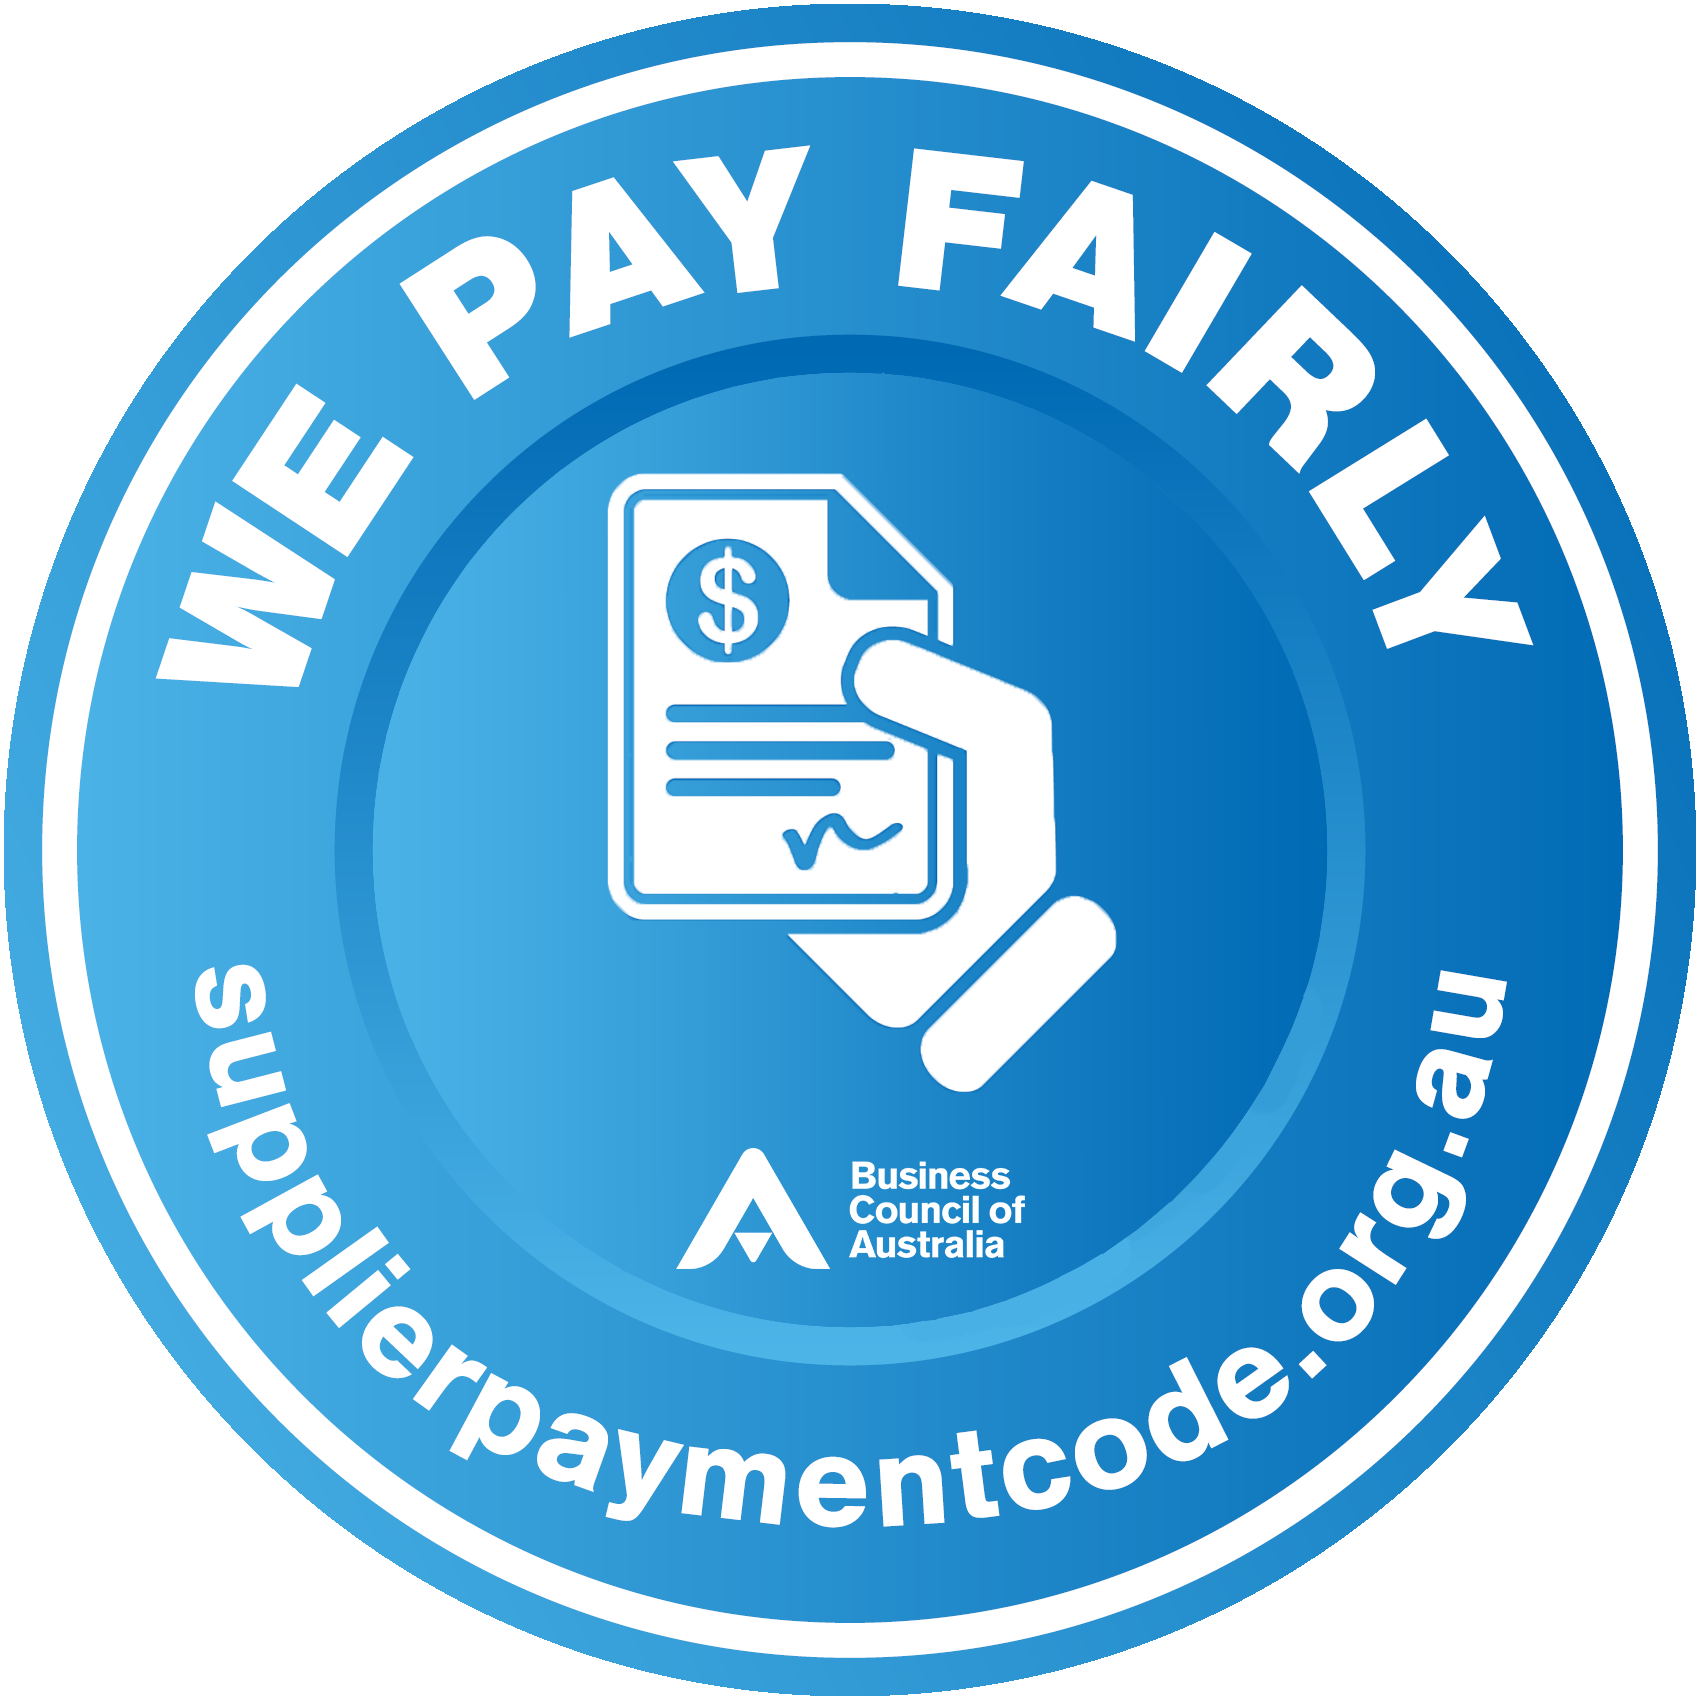 Supplier-Payment-Code-digital-badge